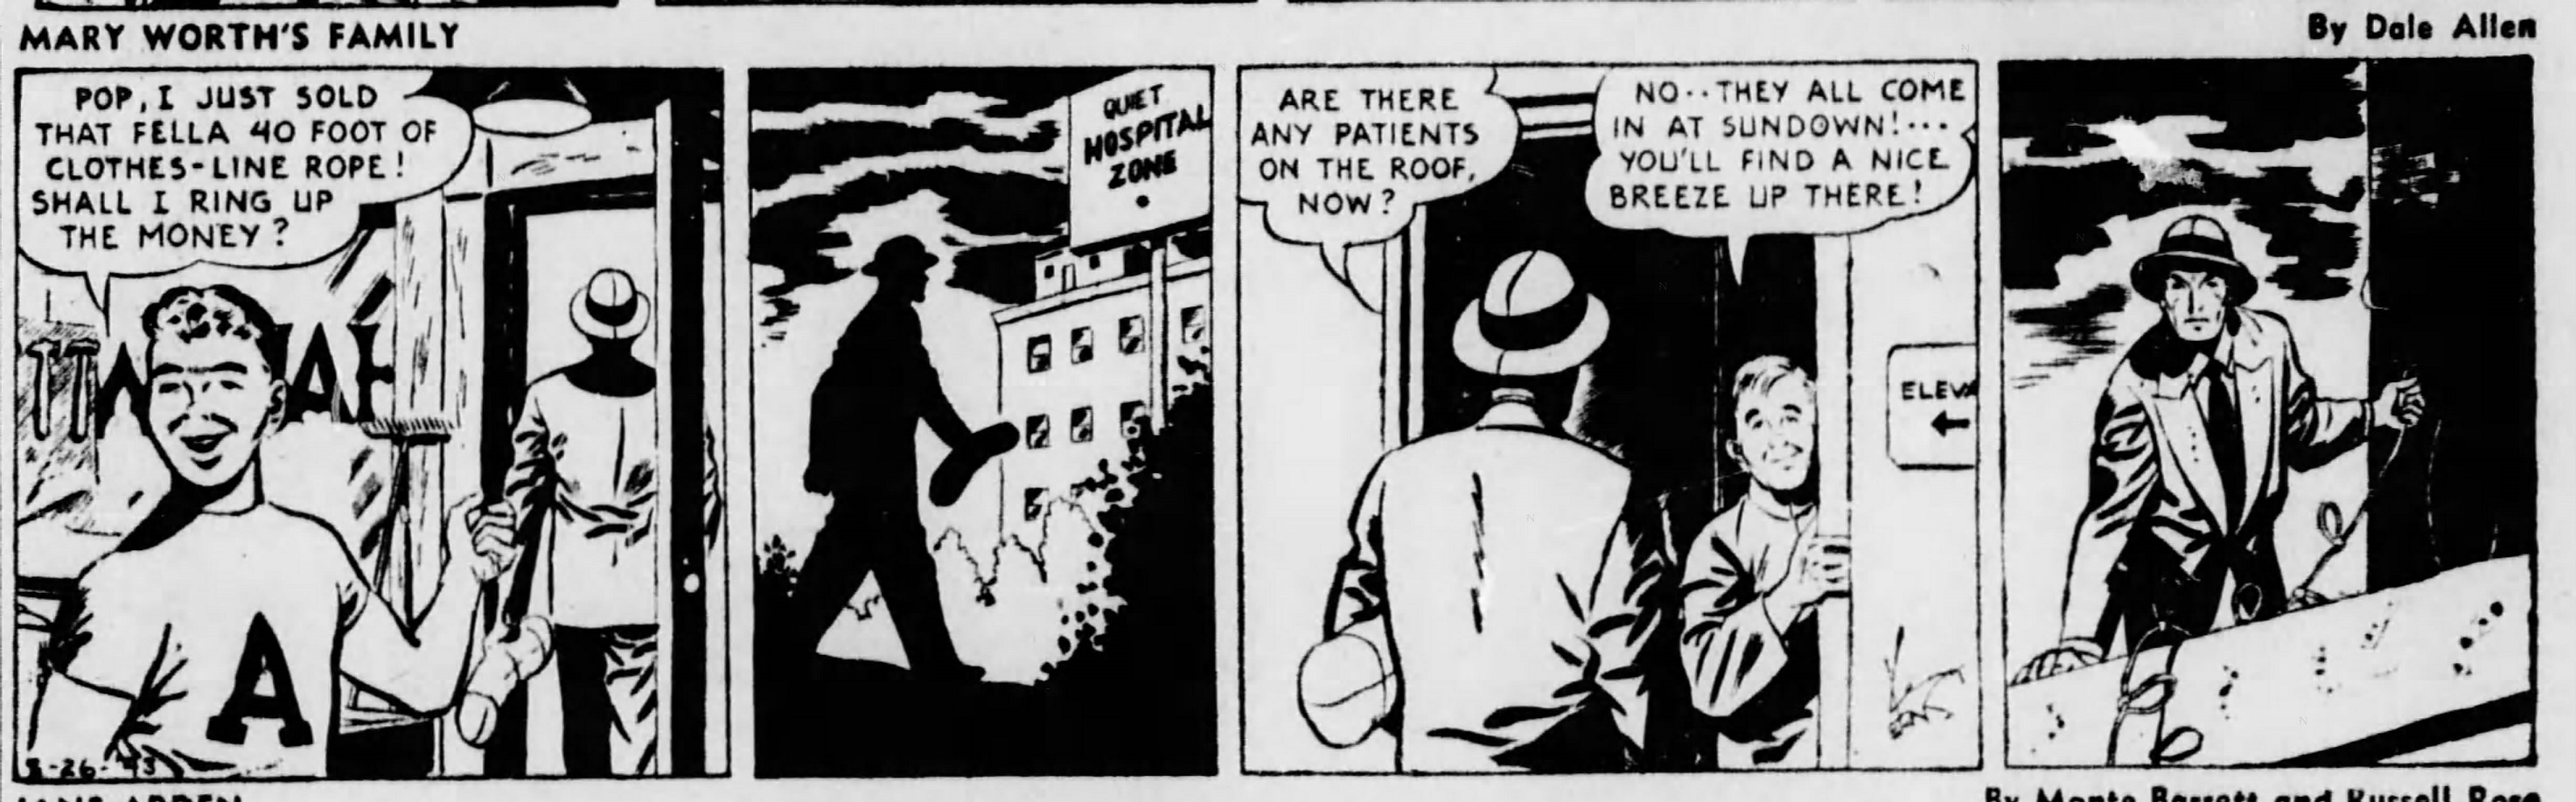 The_Brooklyn_Daily_Eagle_Thu__Aug_26__1943_(5).jpg